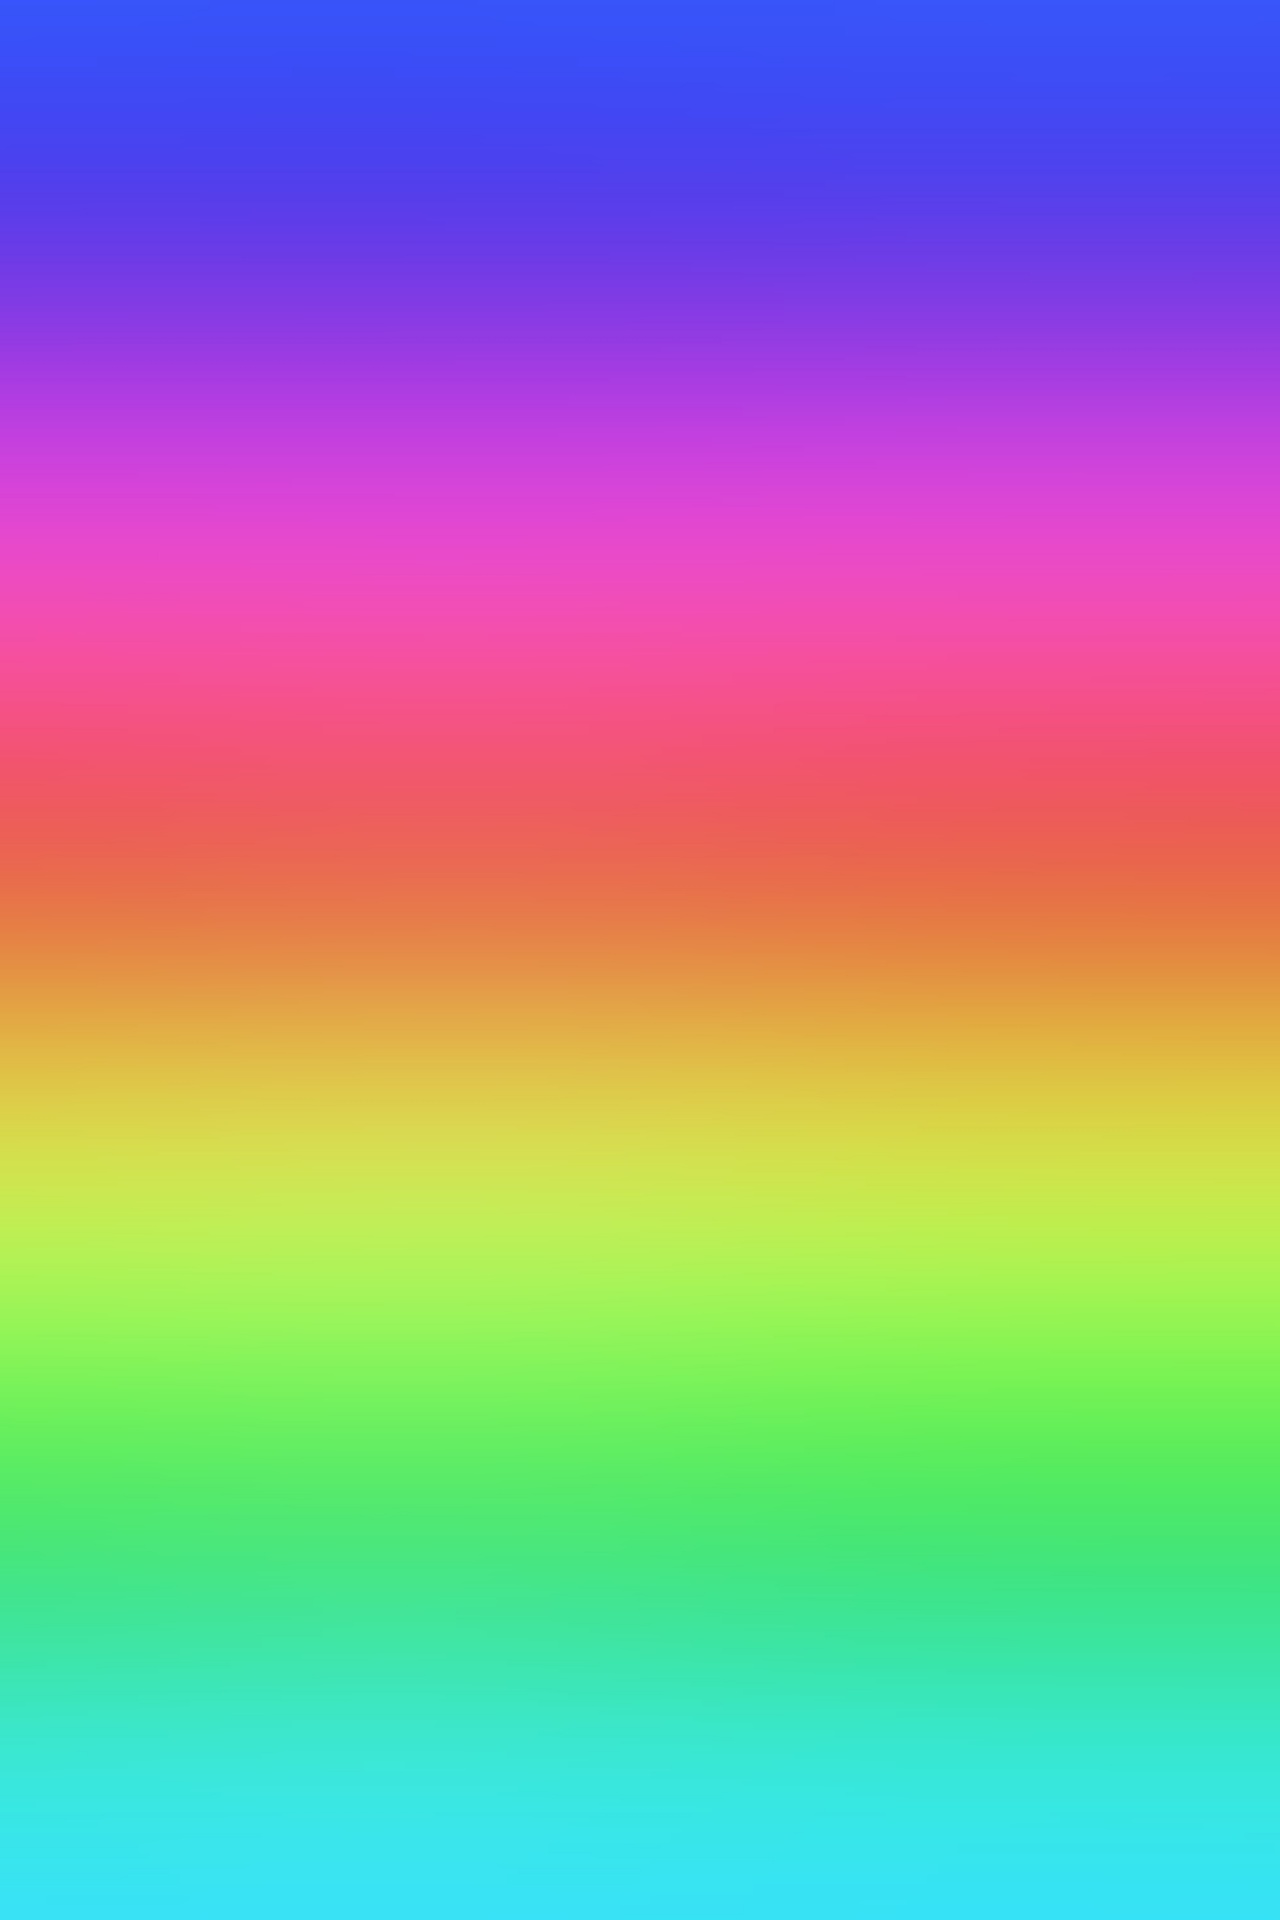 Gradient Rainbow Background